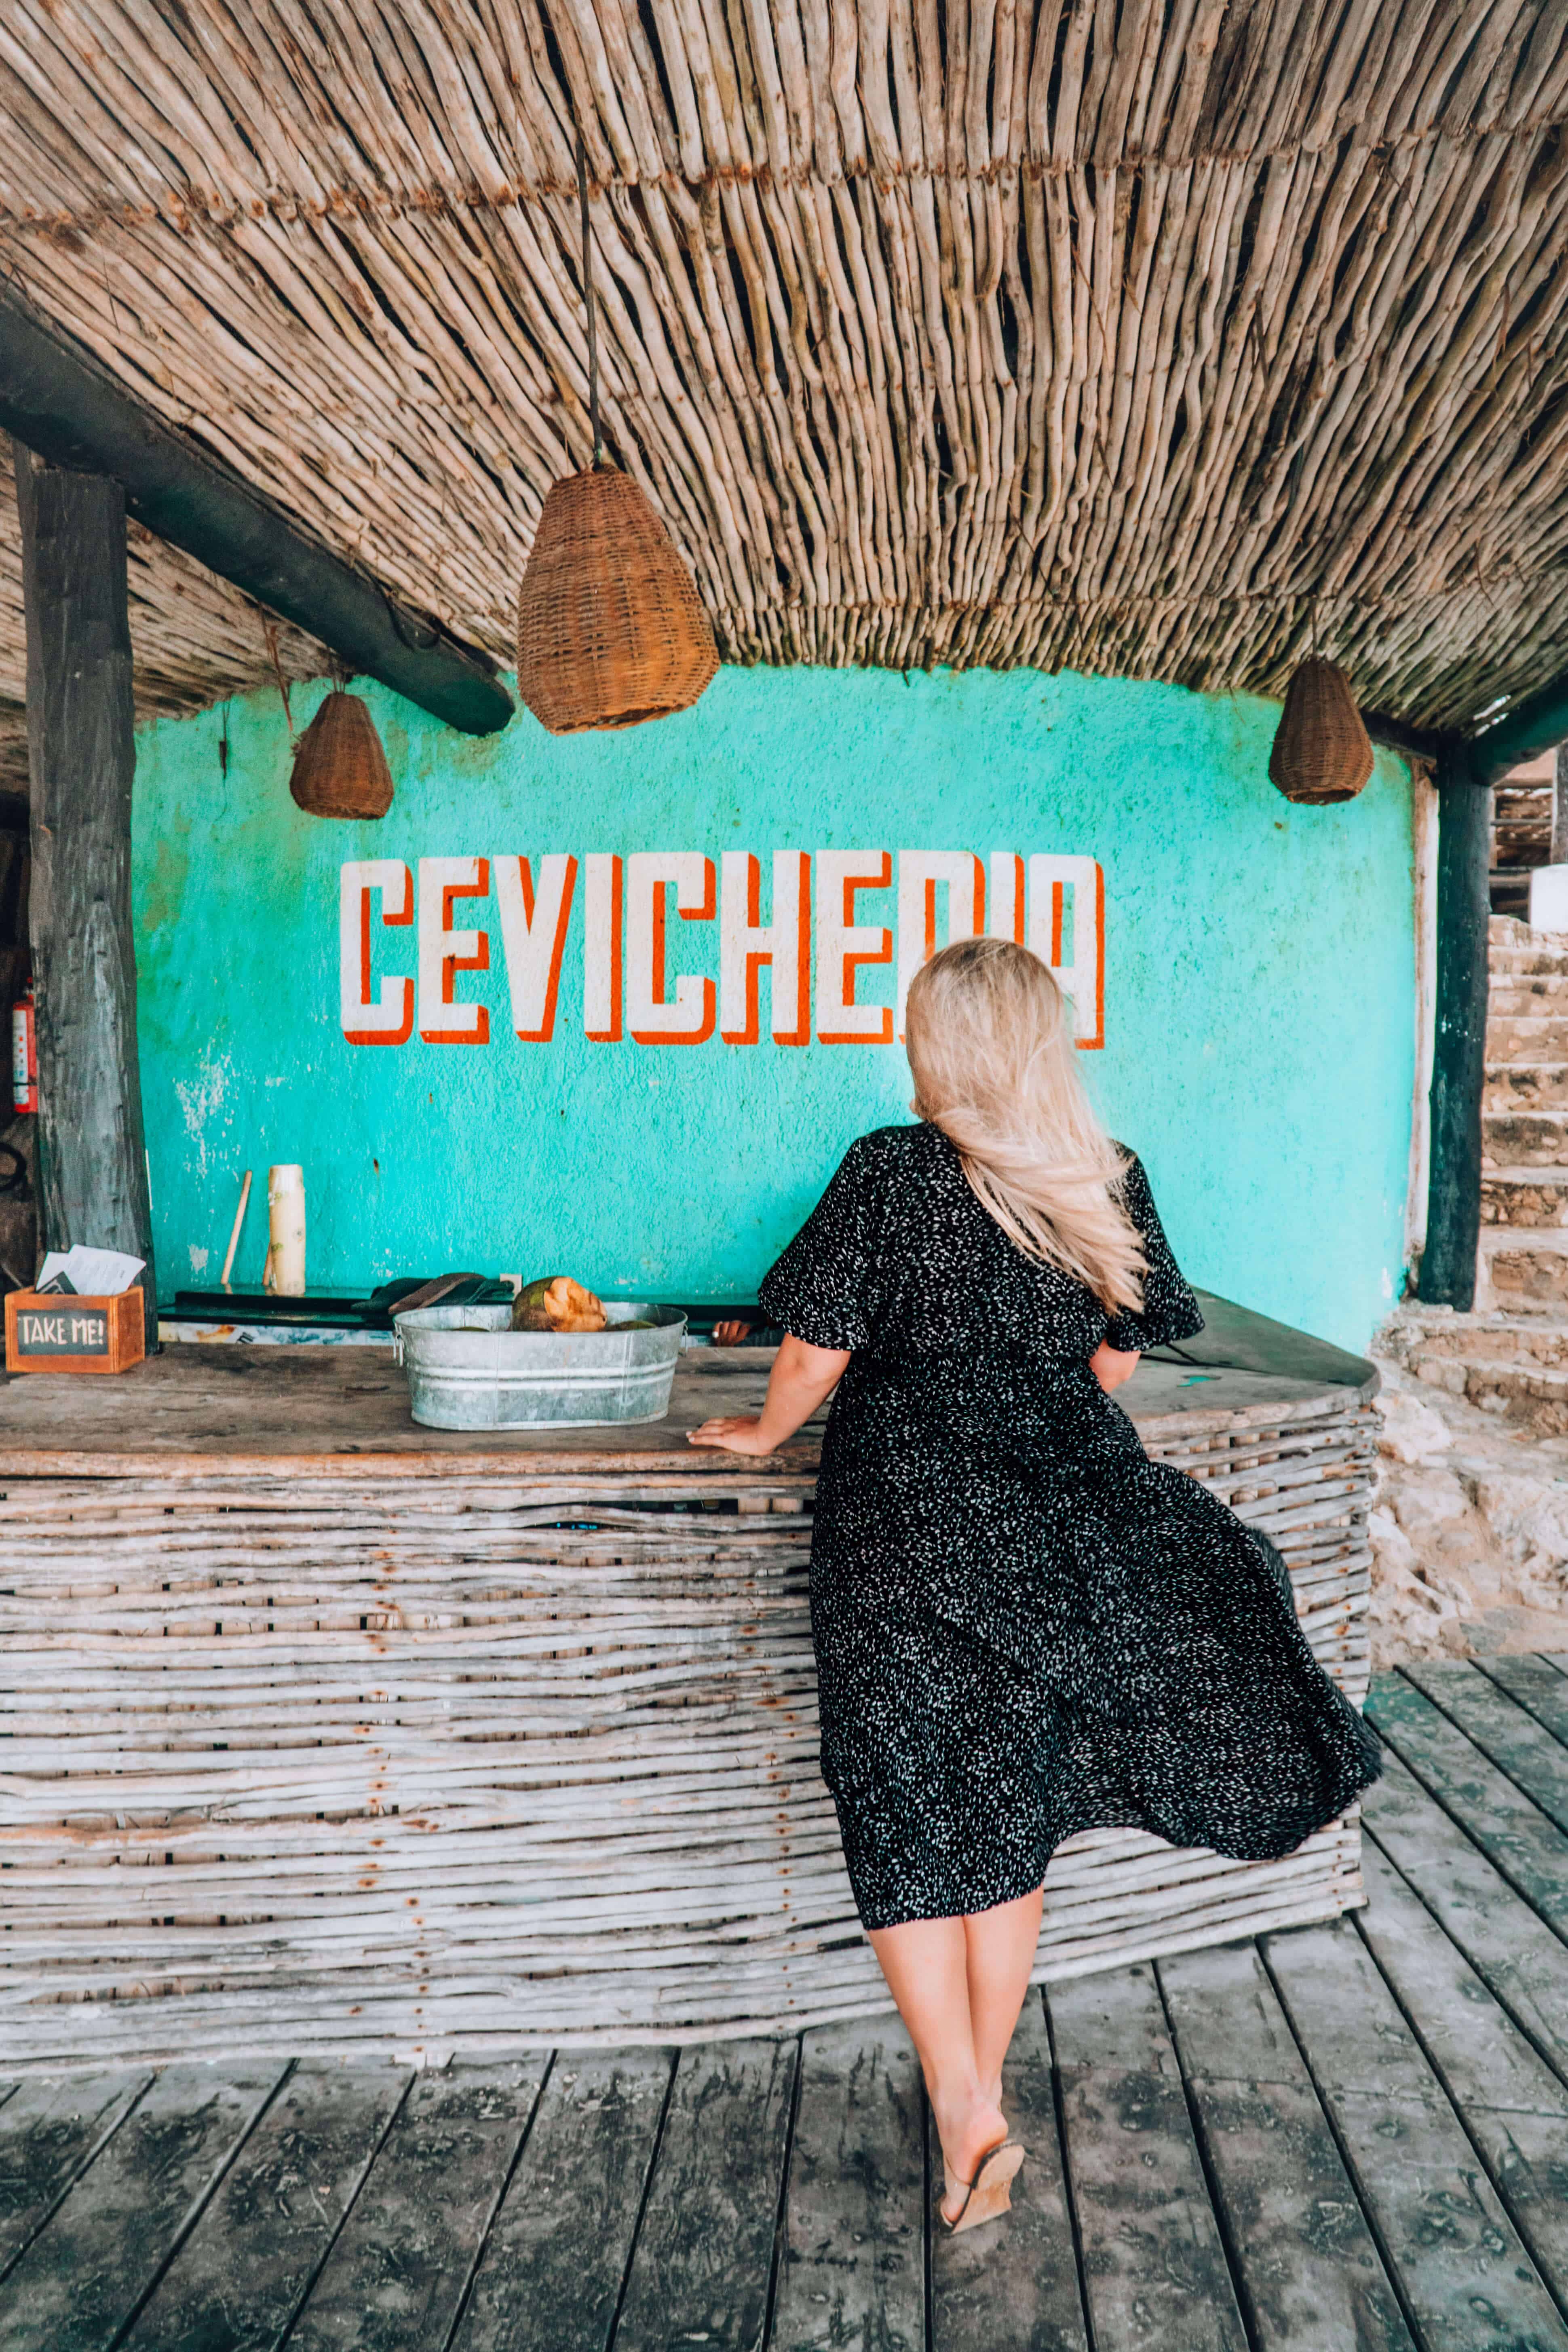 Cevicheria at Papaya Playa Project | TULUM IN 20 PHOTOS | The Republic of Rose | #Tulum #Mexico